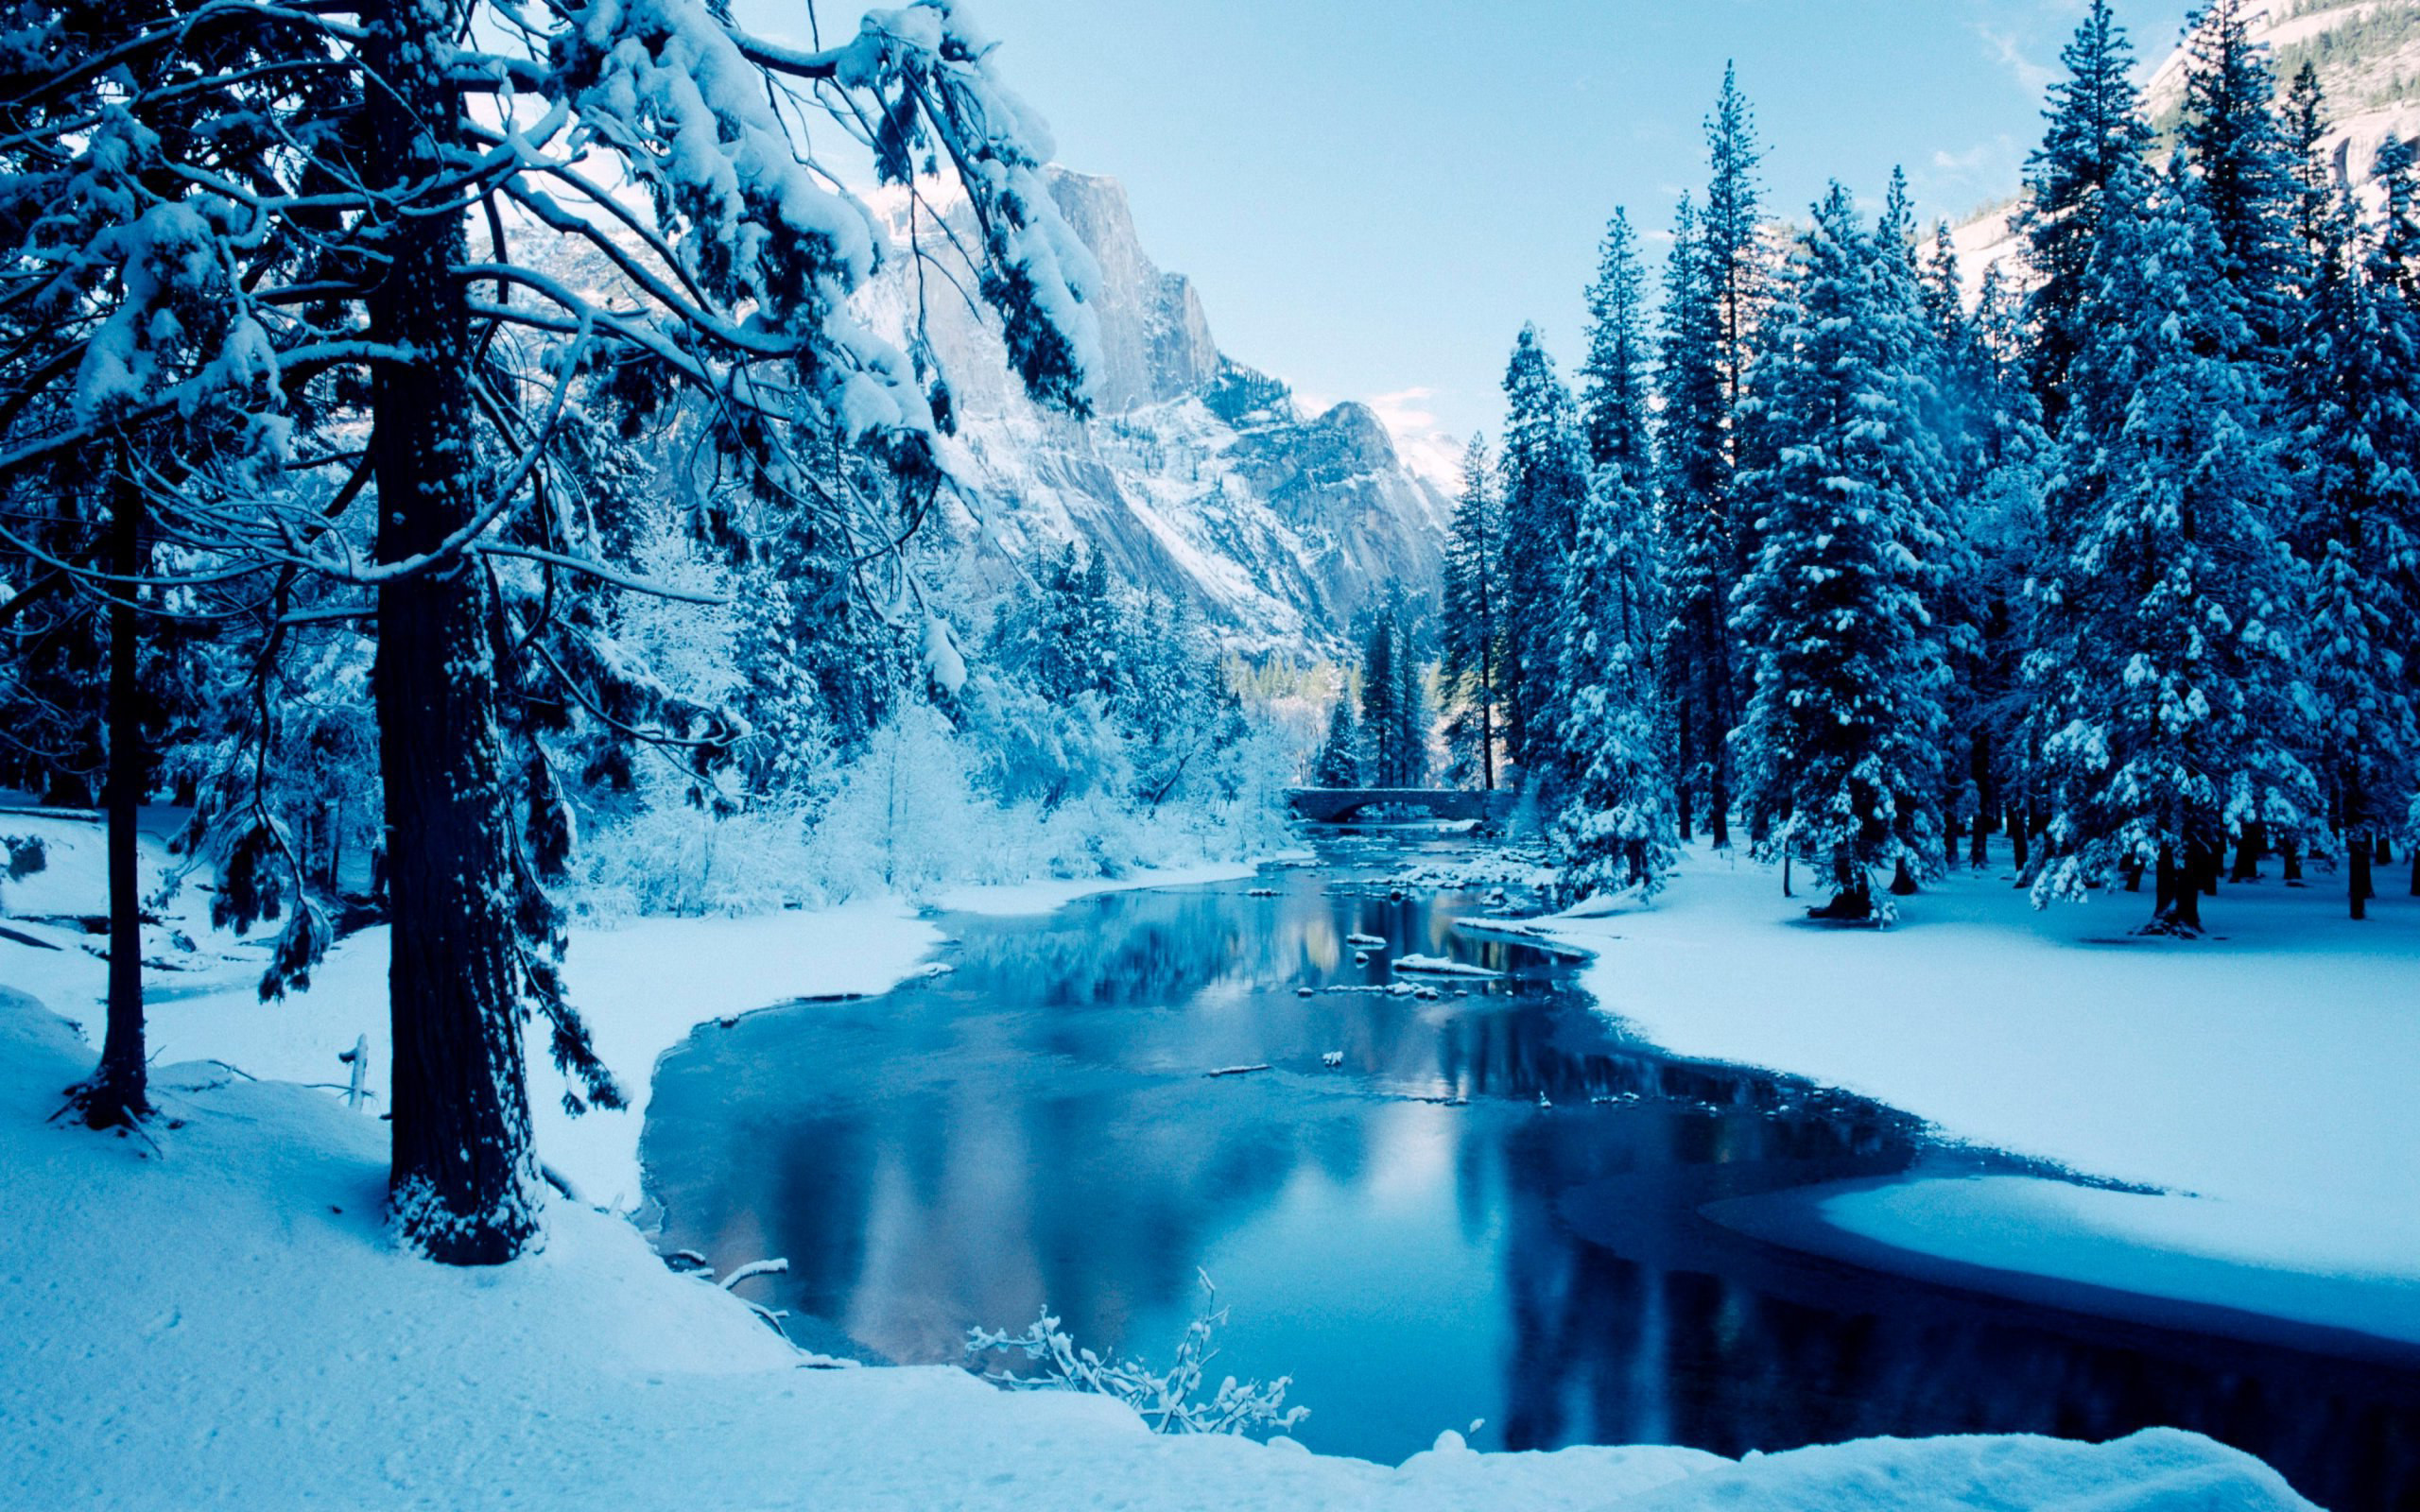 Winter Ice Lake Scenes Desktop Wallpaper Wallpapers Pinterest Winter scenes, Scene and Wallpaper